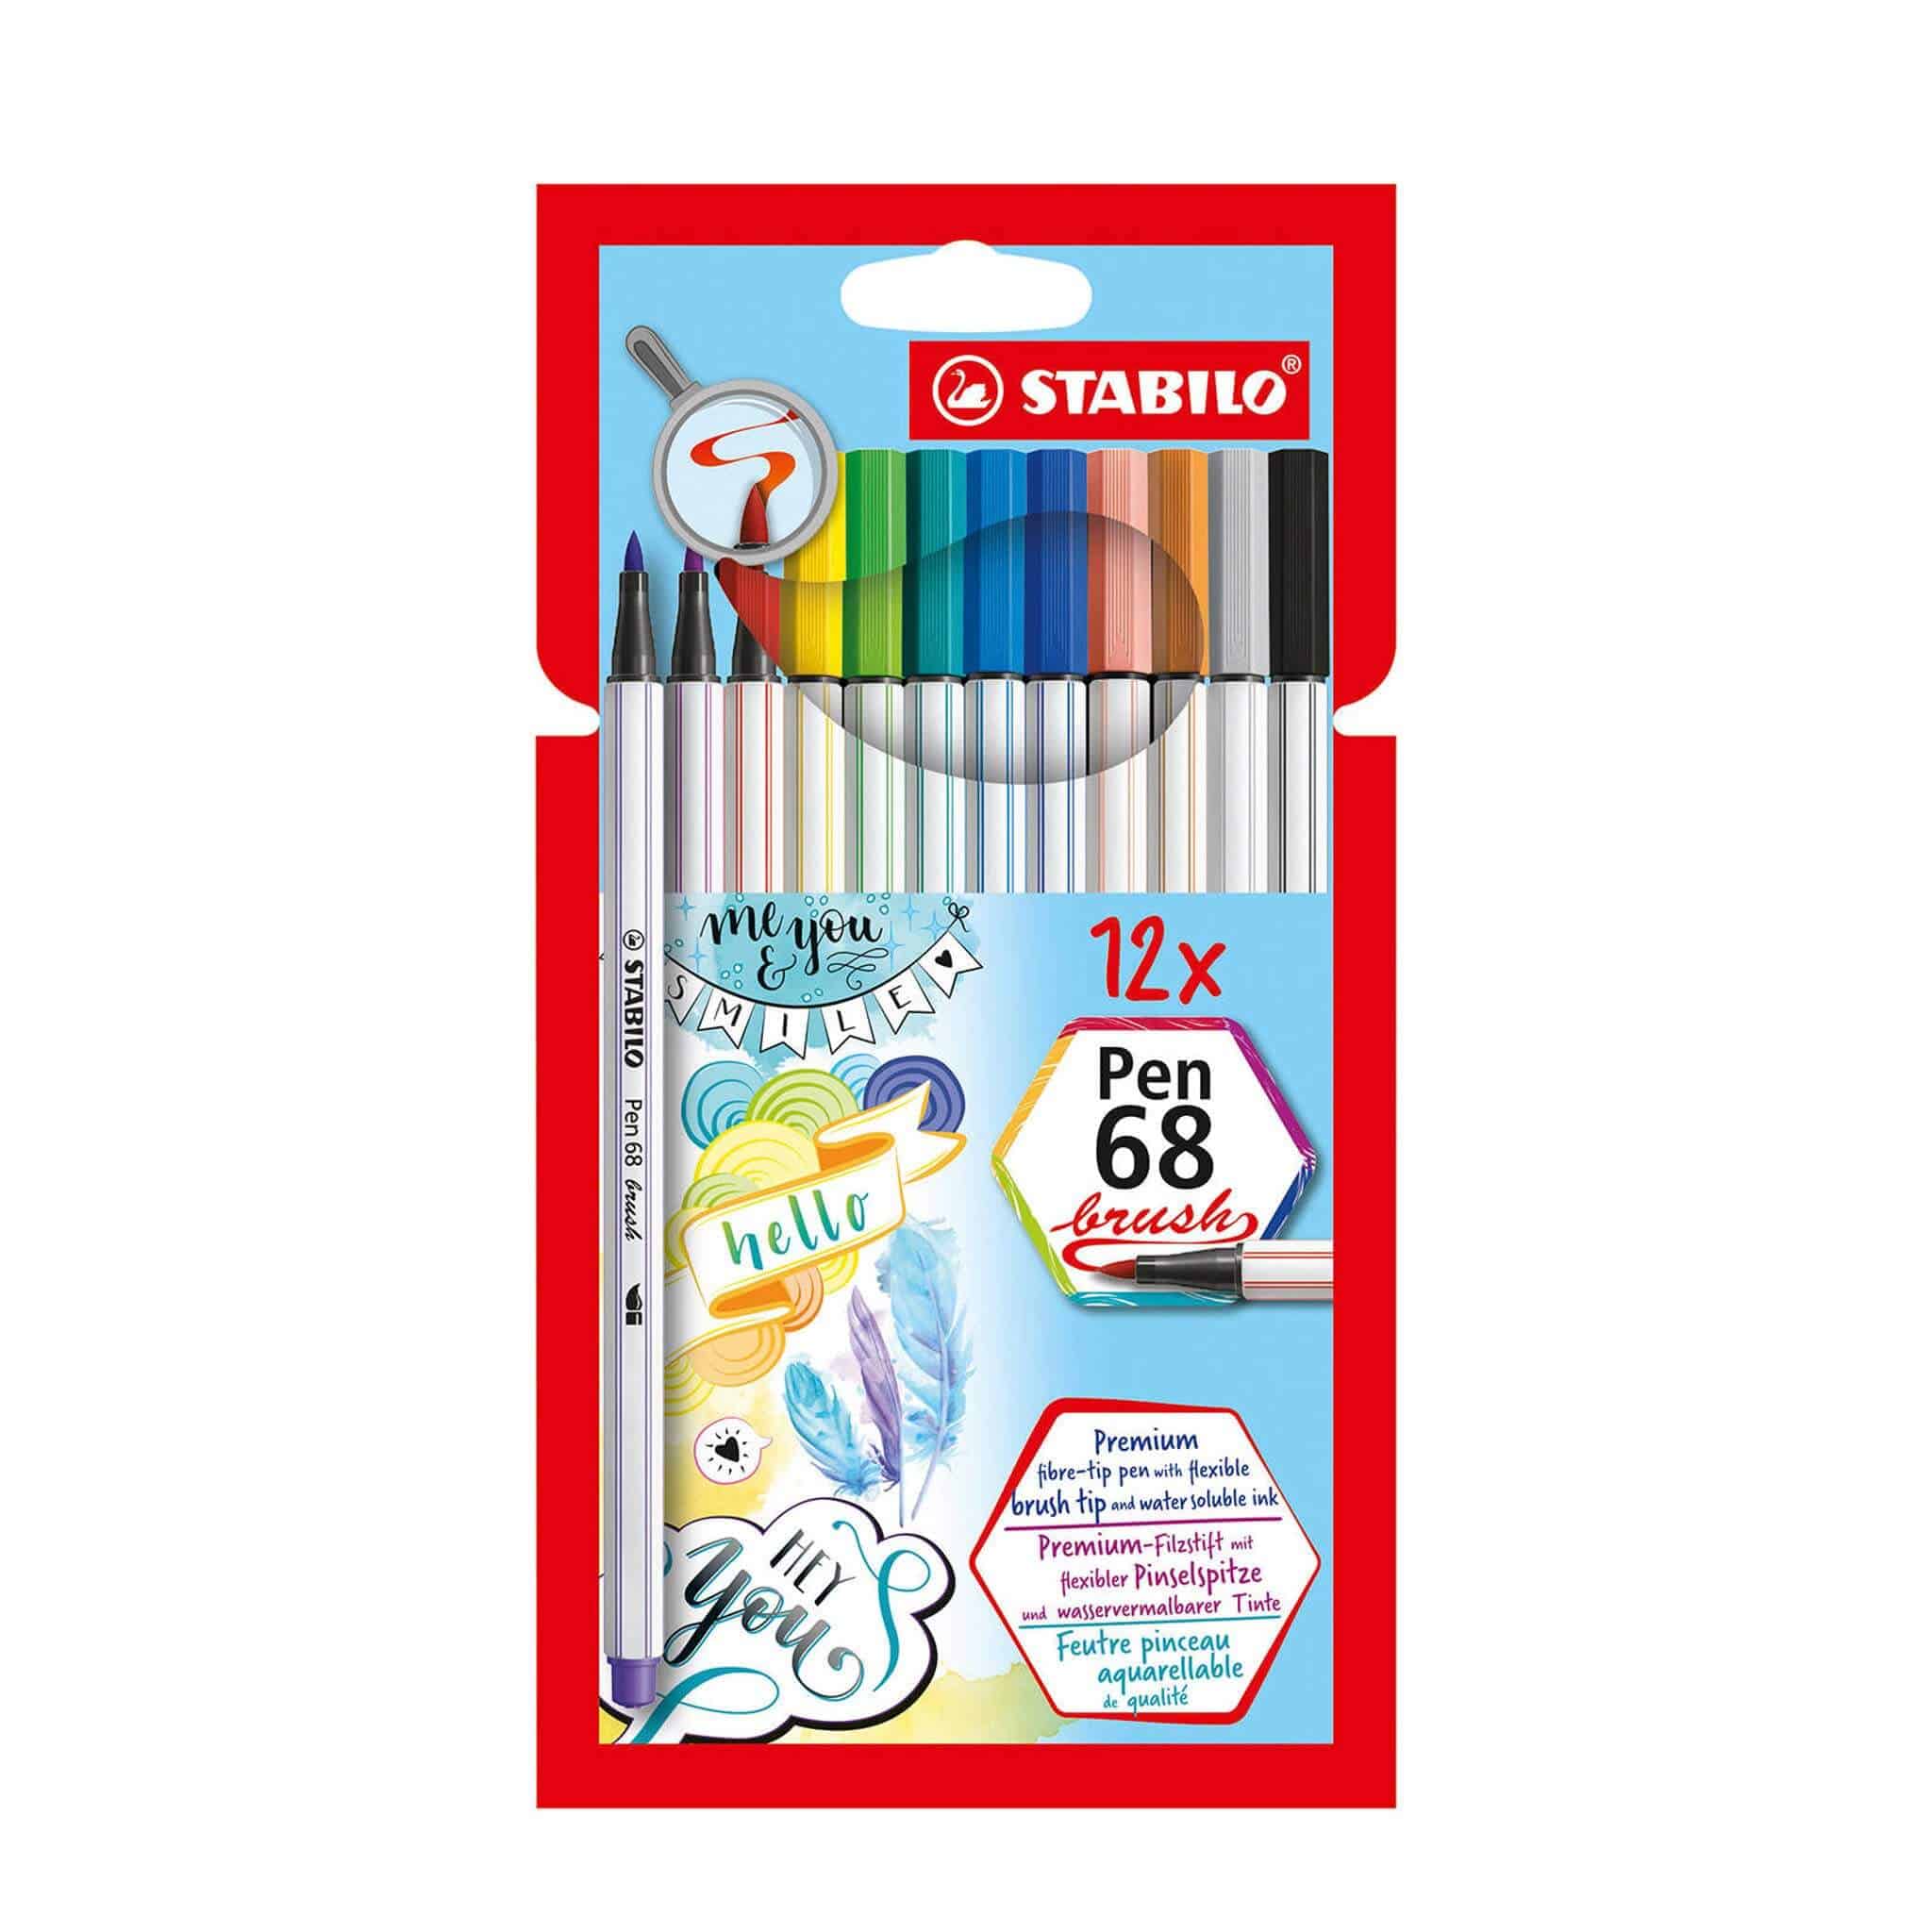 STABILO Pen 68 Brush Viltstiften - Etui